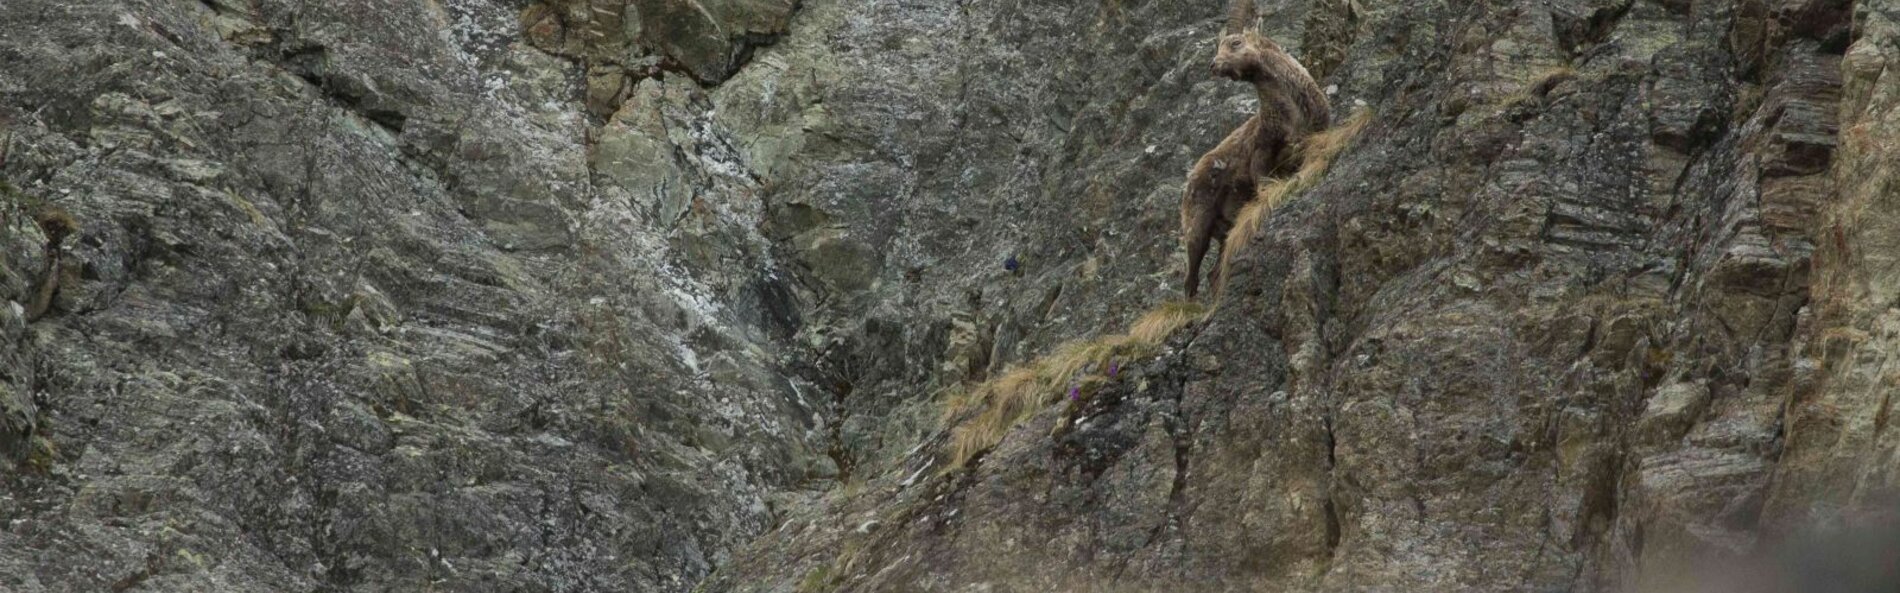 Ibex in rock wall